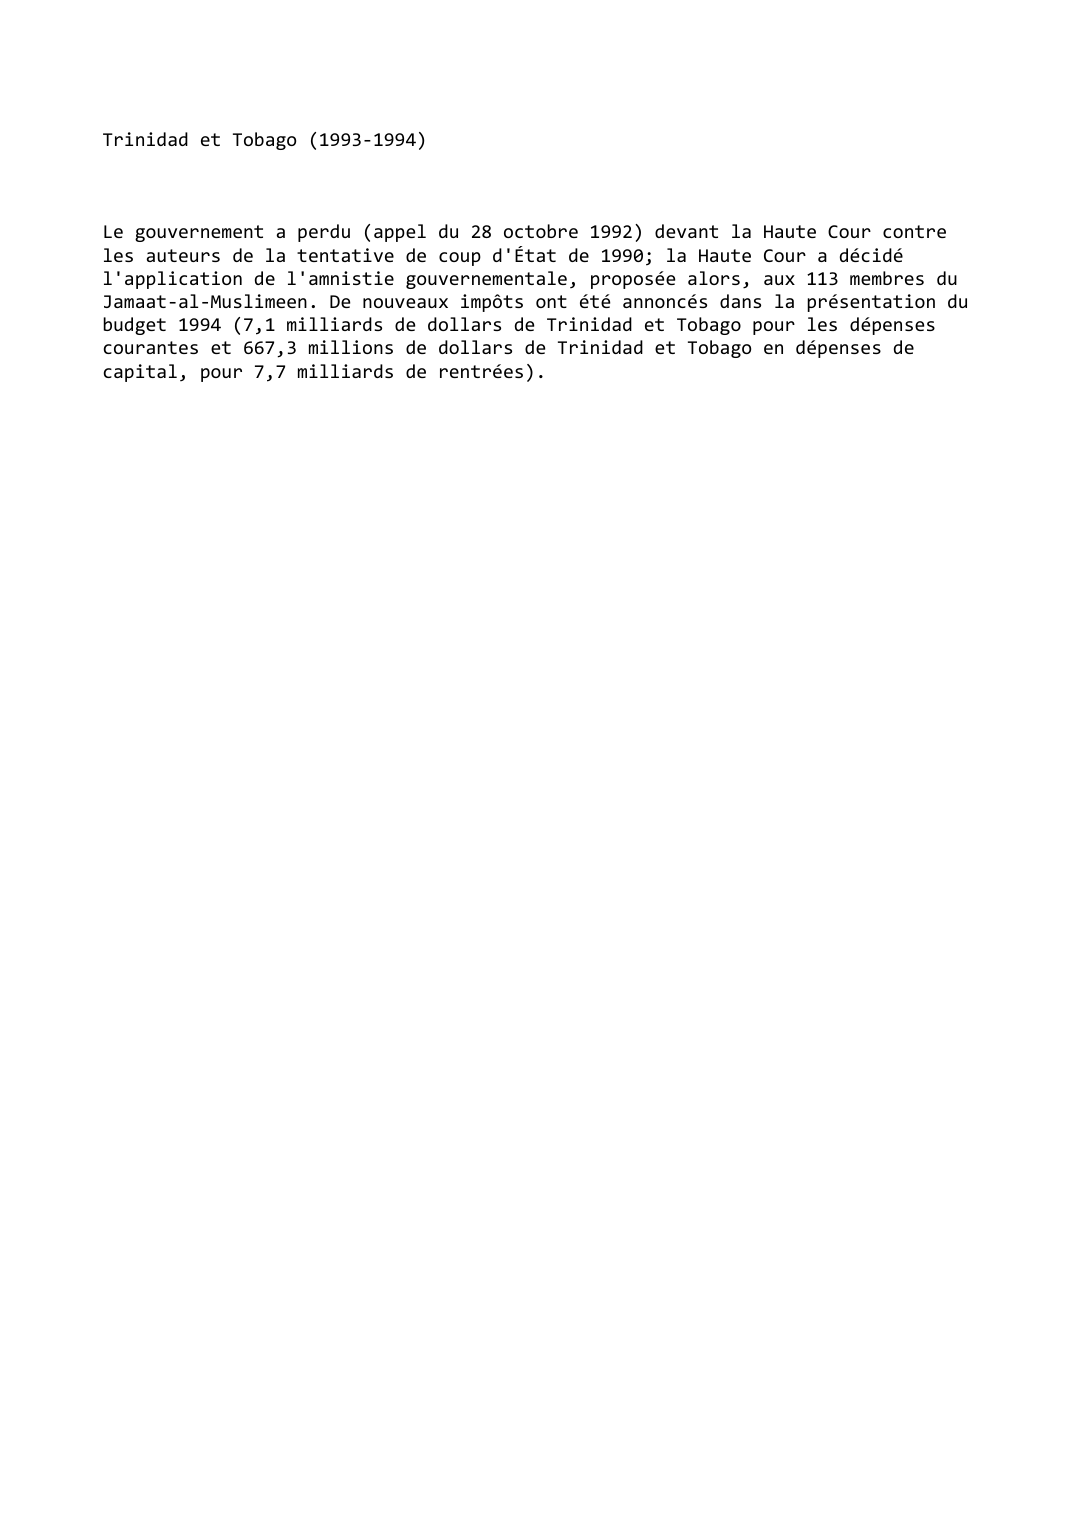 Prévisualisation du document Trinidad et Tobago (1993-1994)